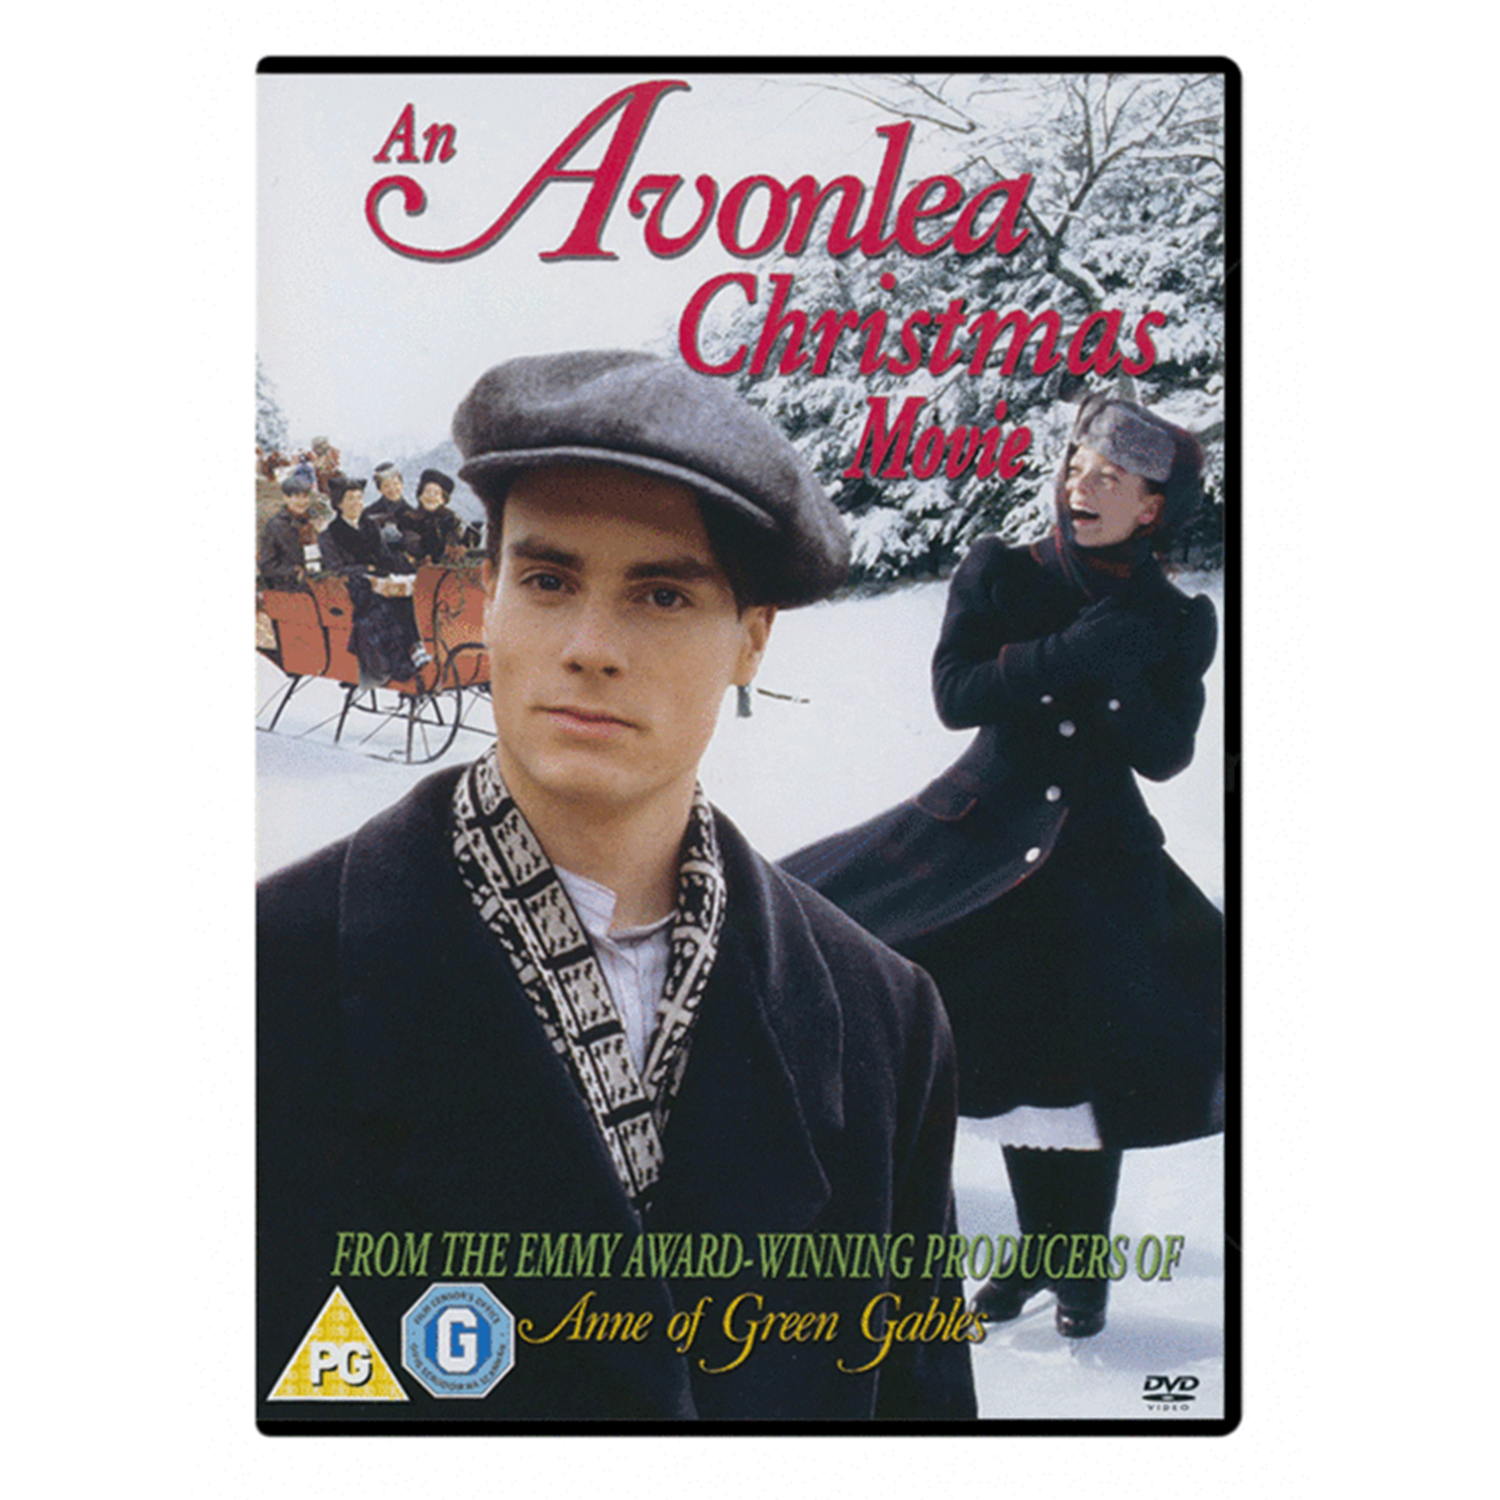 An Avonlea Christmas (PAL DVD-UK) Standard Fullscreen